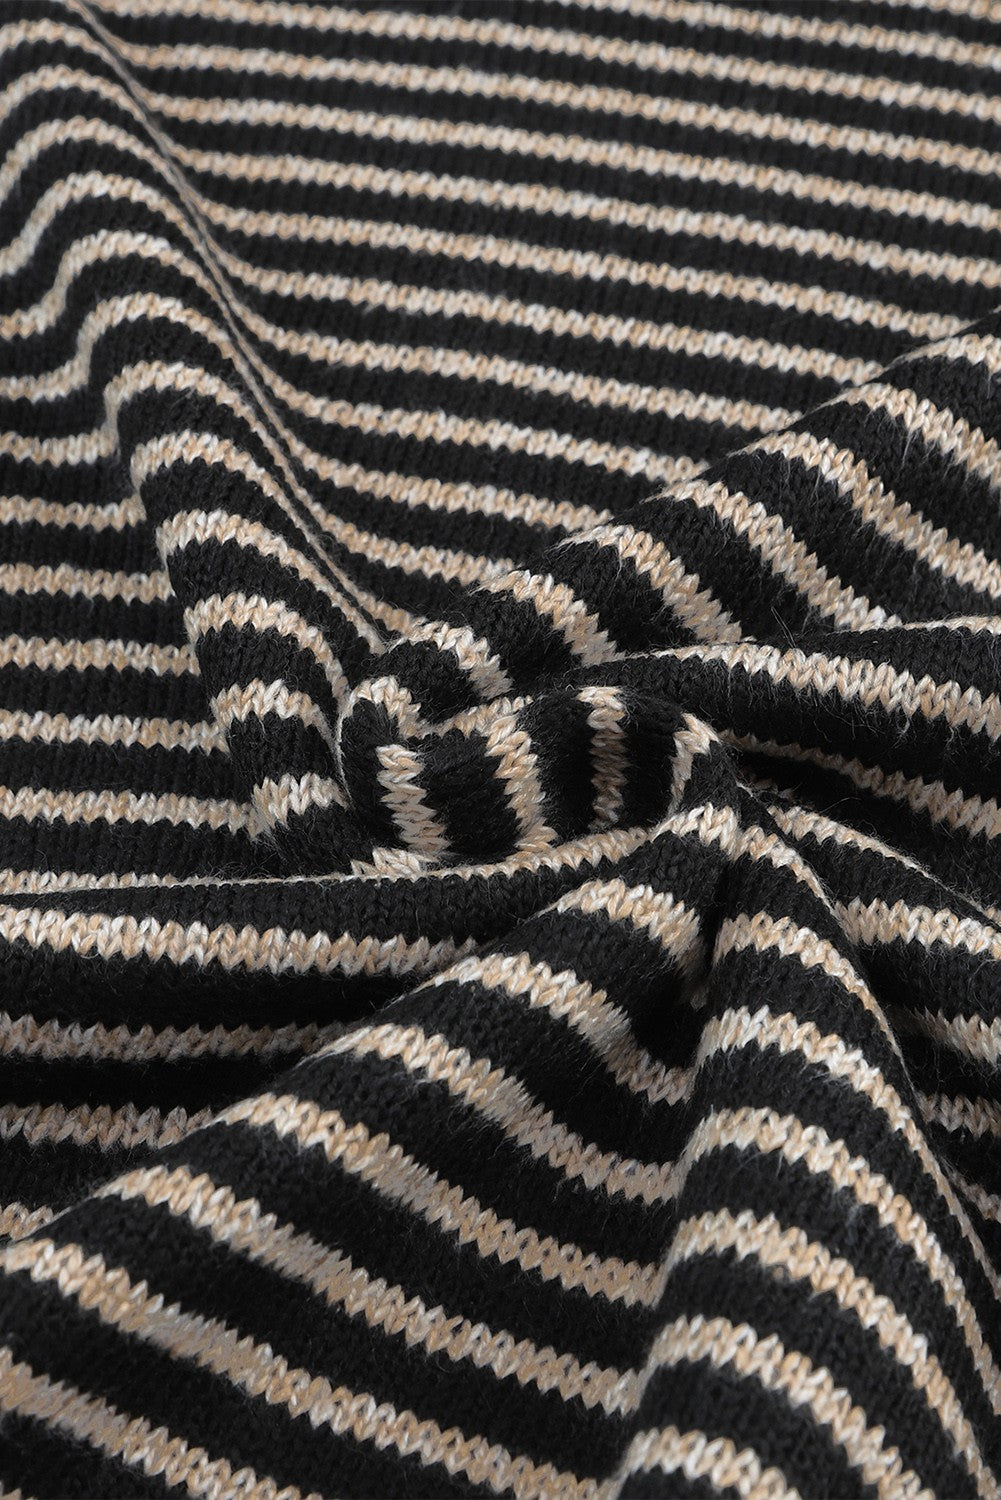 Sweater, Turtleneck, Black w/Taupe Stripes, Regular and Plus